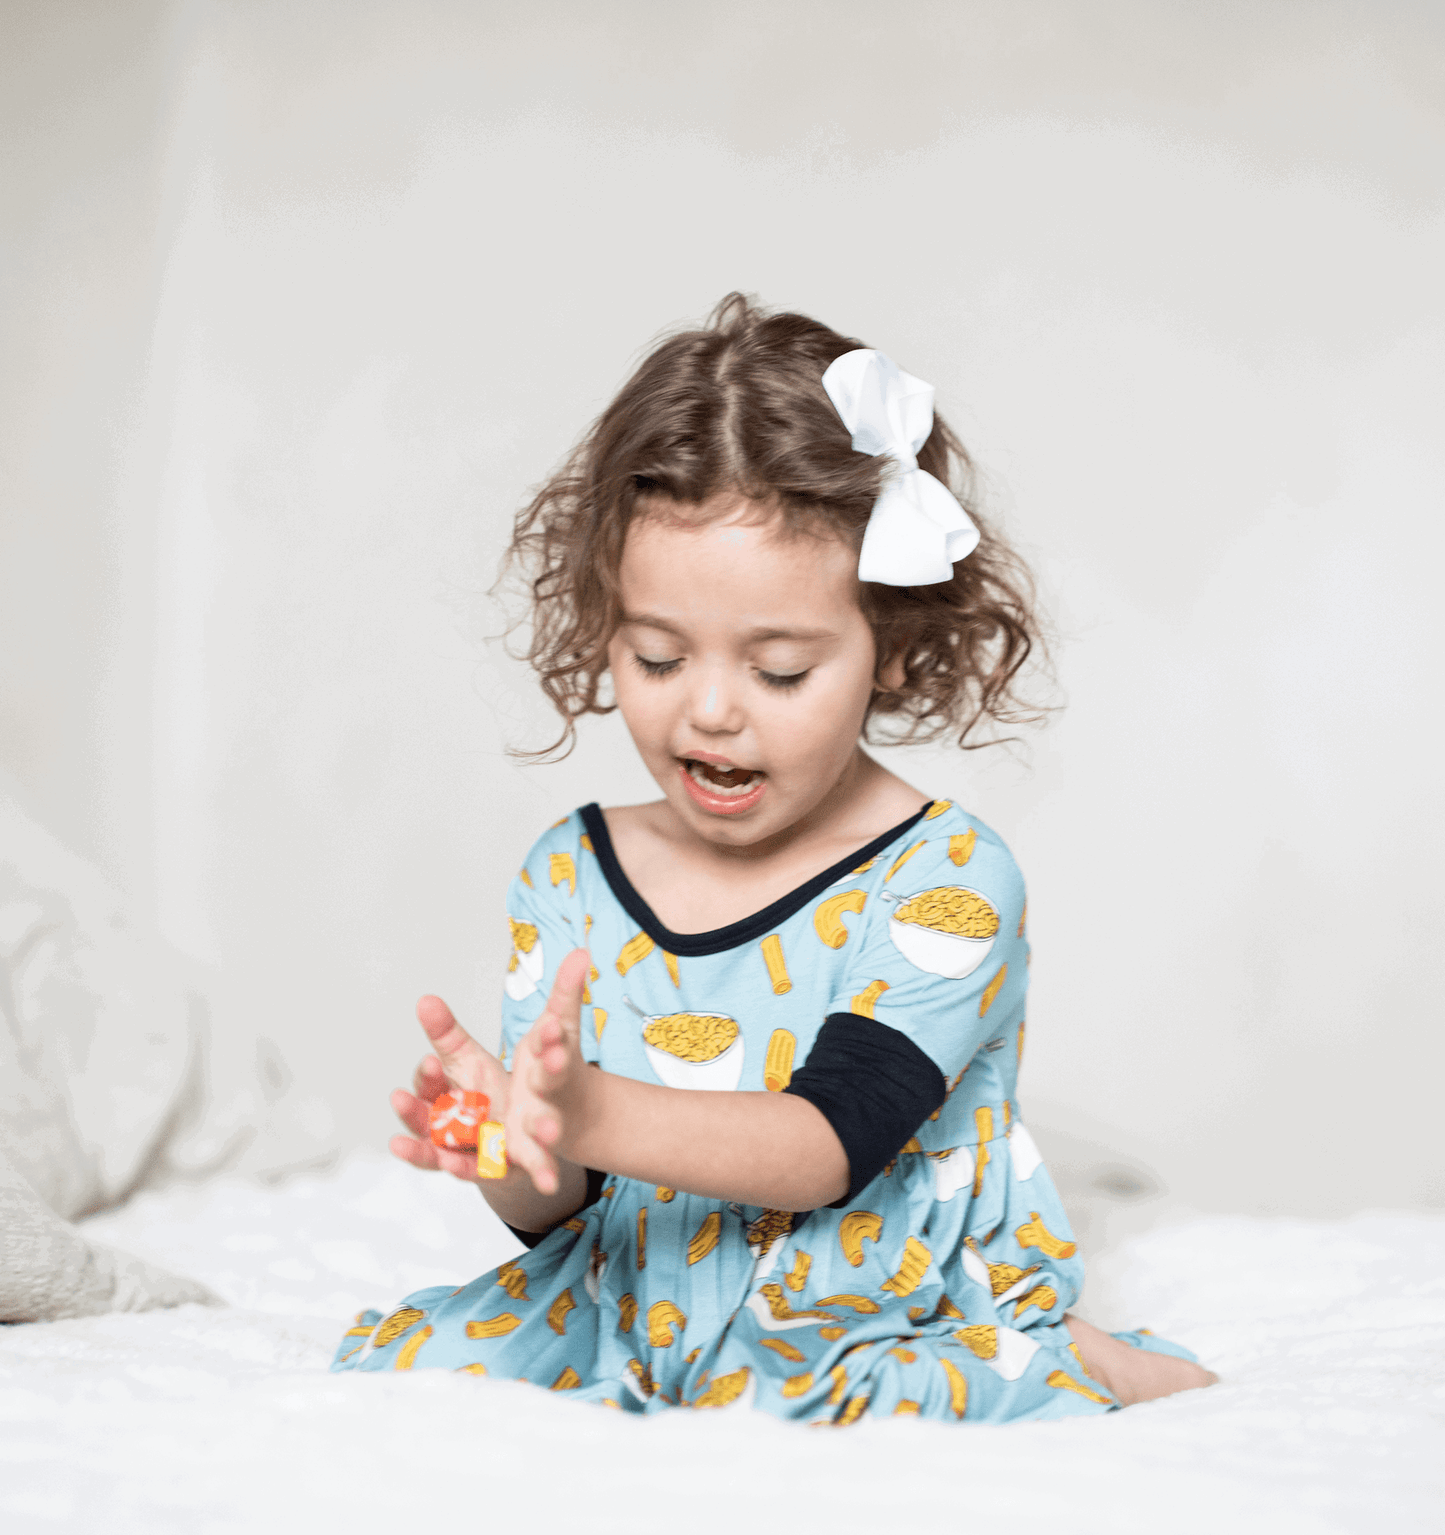 Mac and Cheese Children's Bamboo Twirl Dress - Peregrine Kidswear - Dresses - 2T